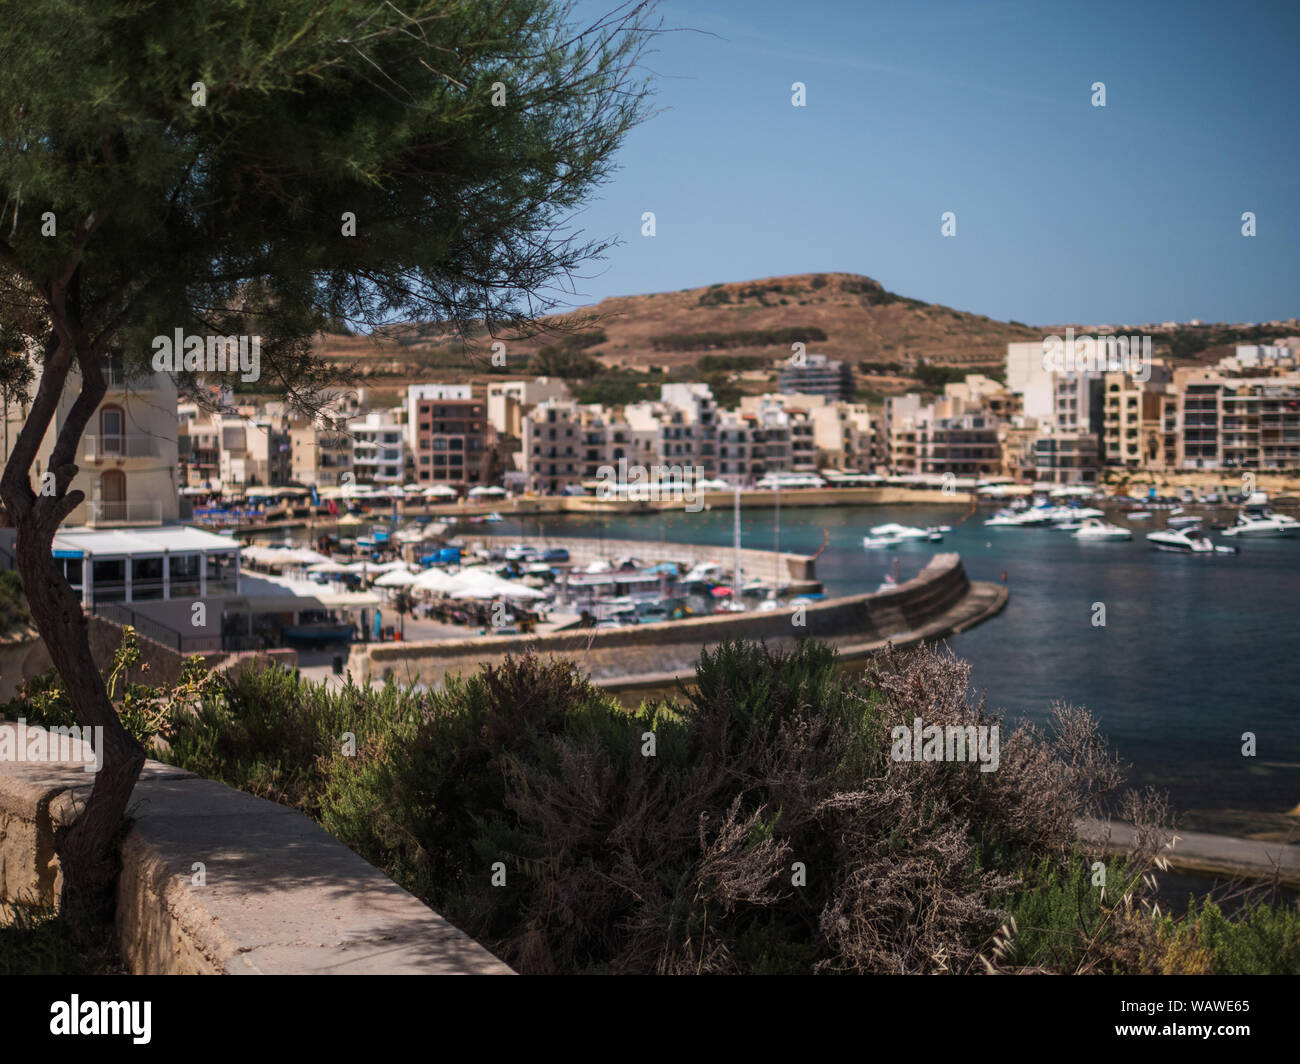 View of a beautiful Marsalforn bay, Gozo - Malta Stock Photo